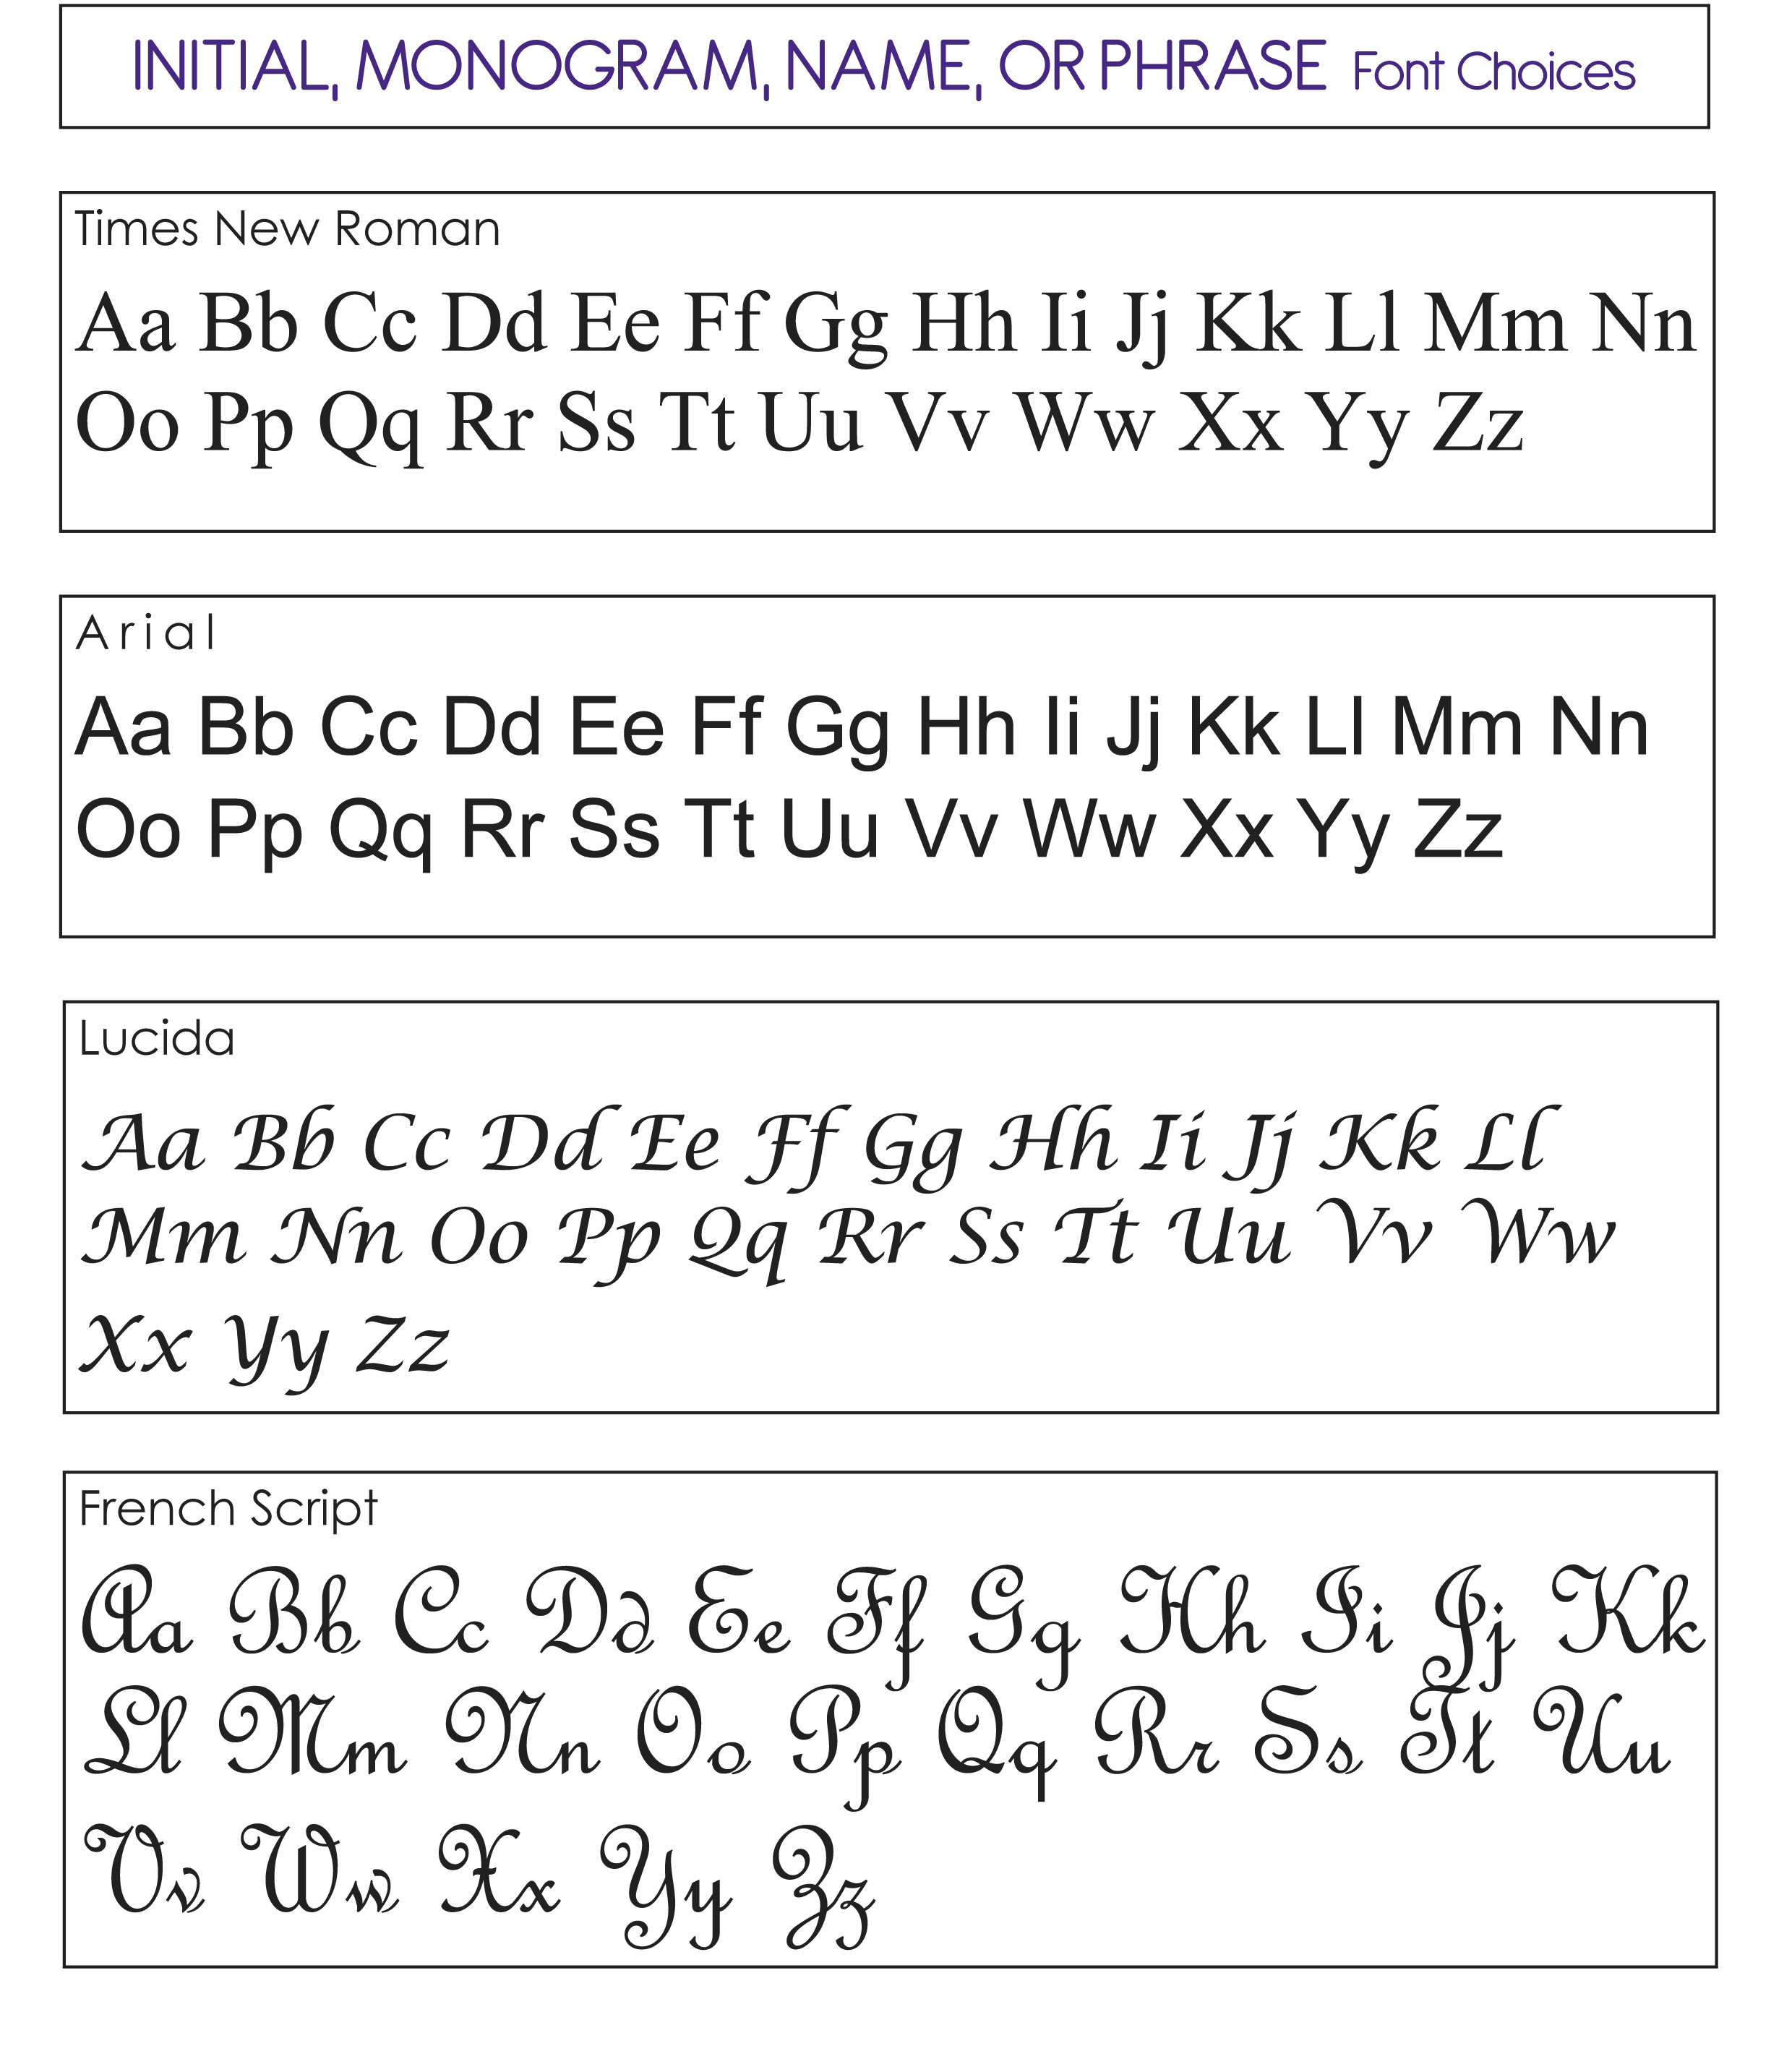 Engraving Fonts